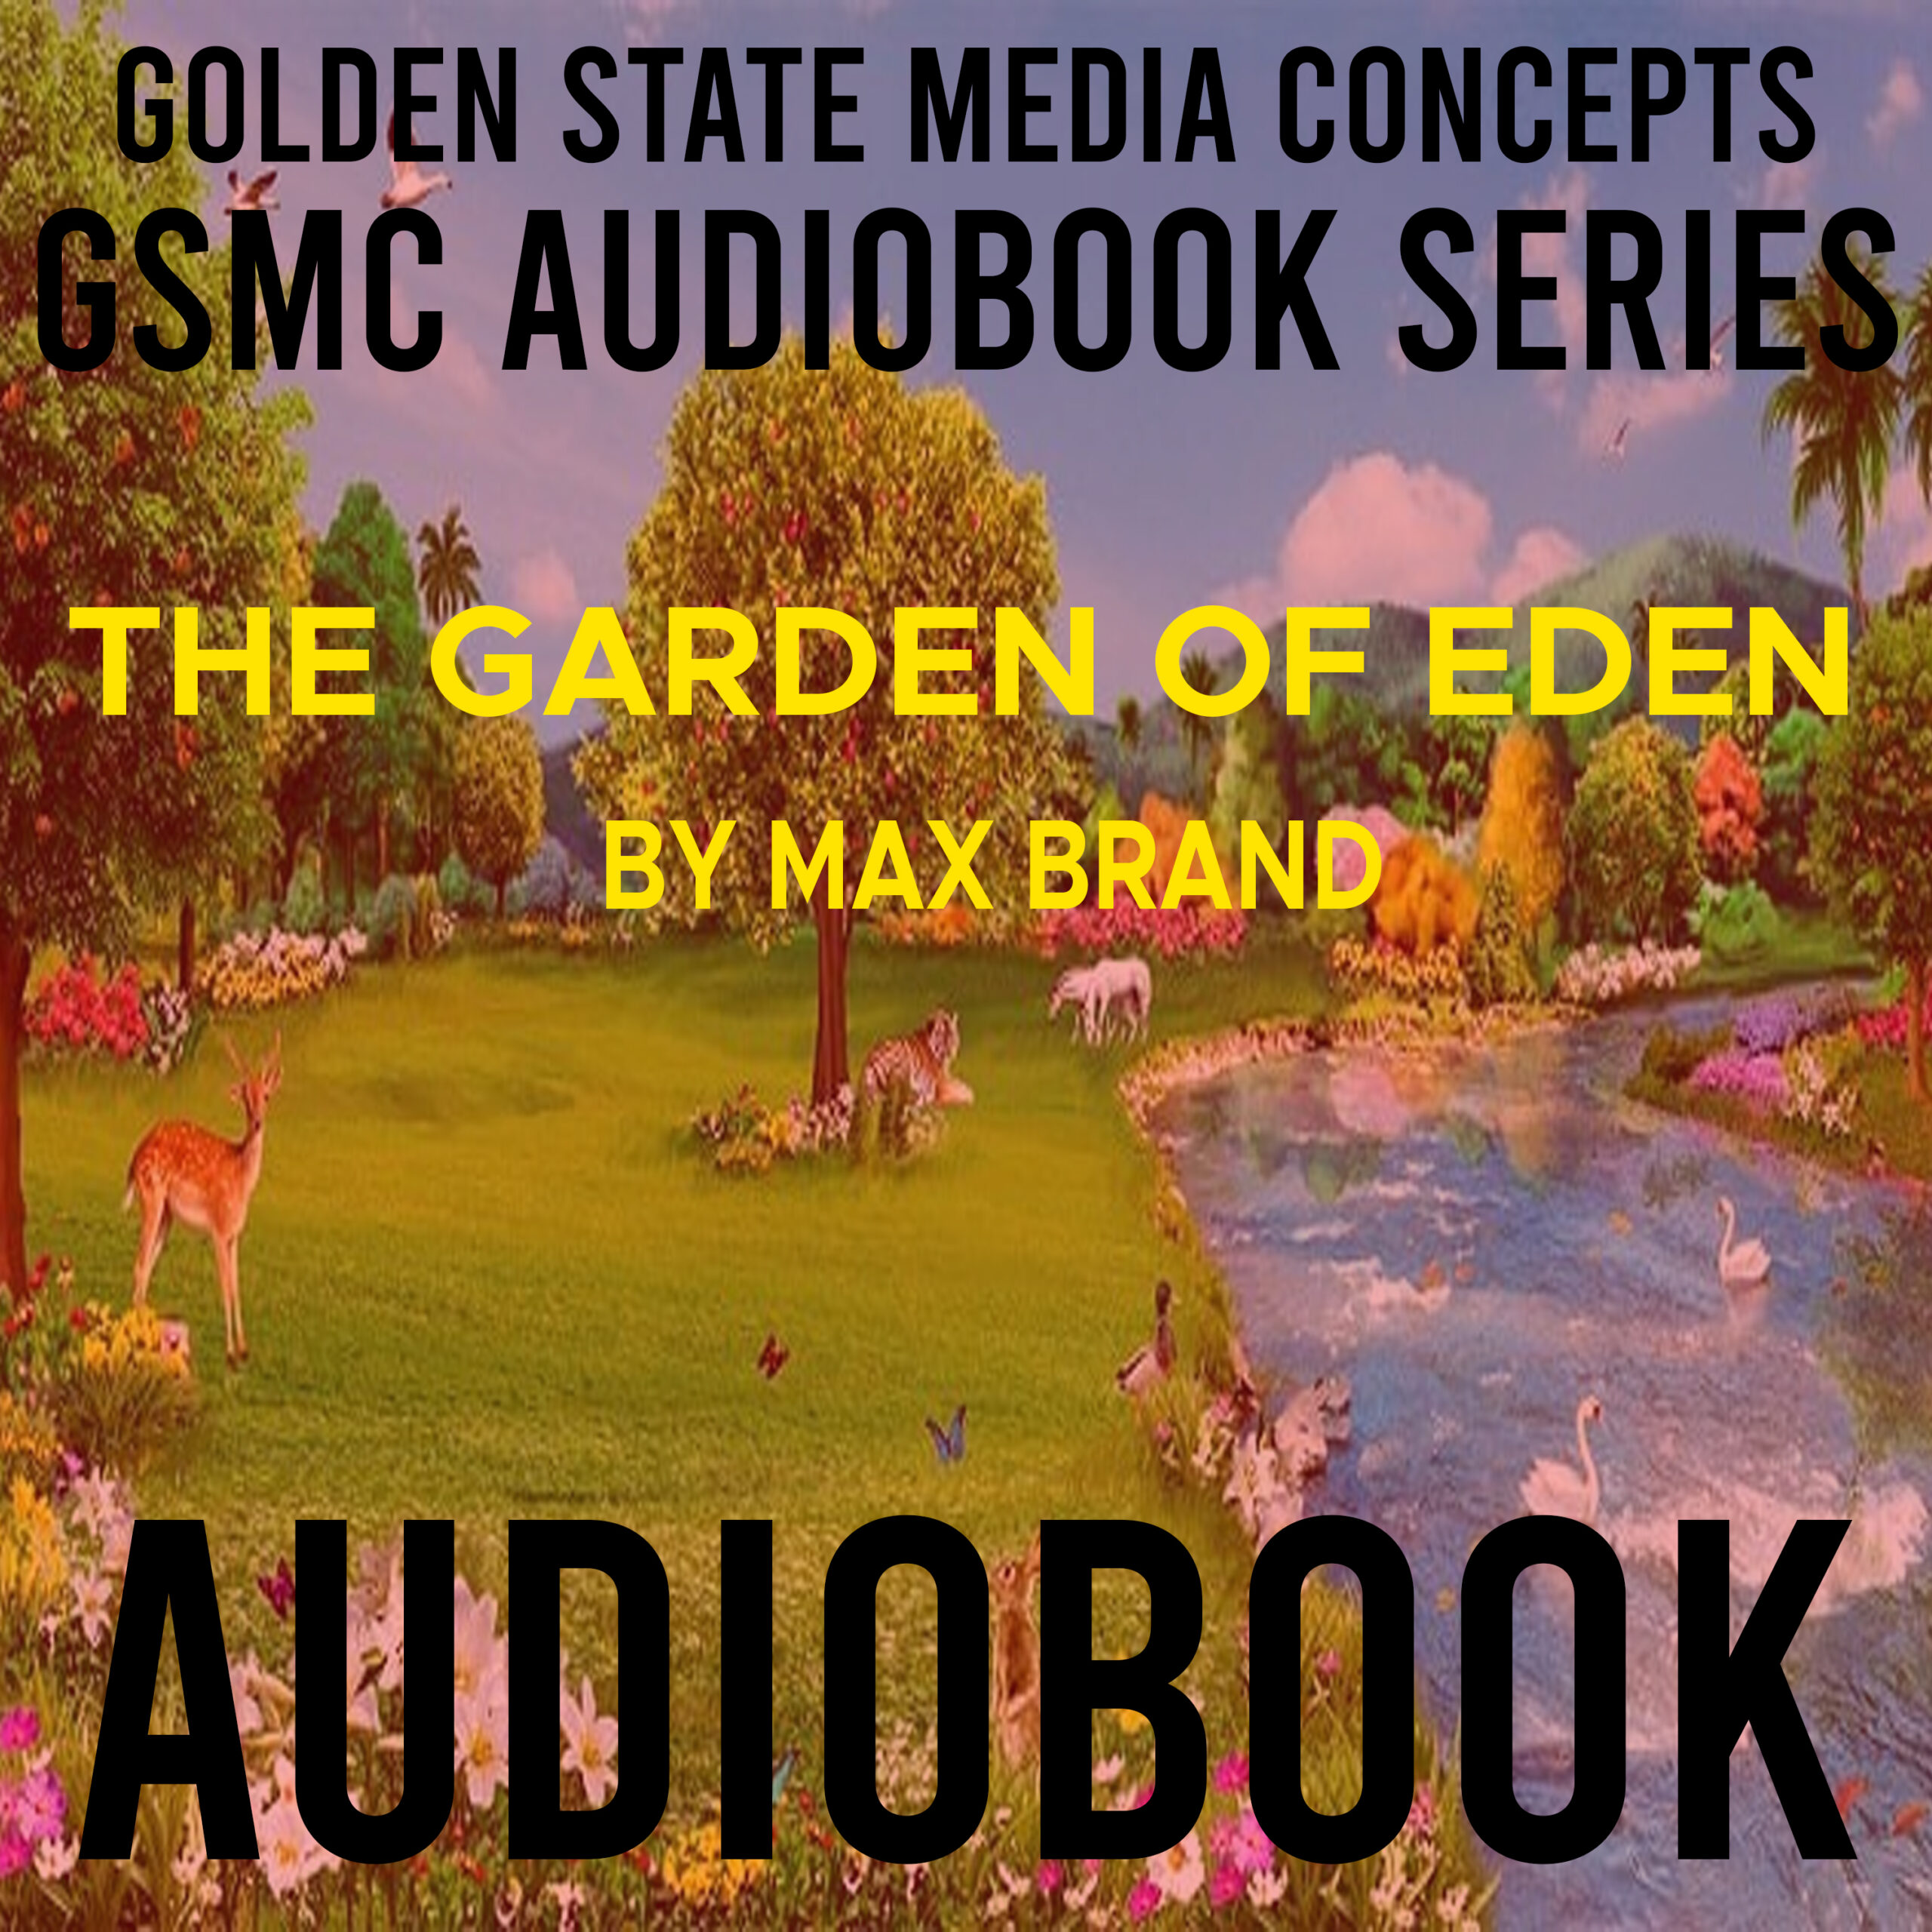 GSMC Audiobook Series: The Garden of Eden by Max Brand